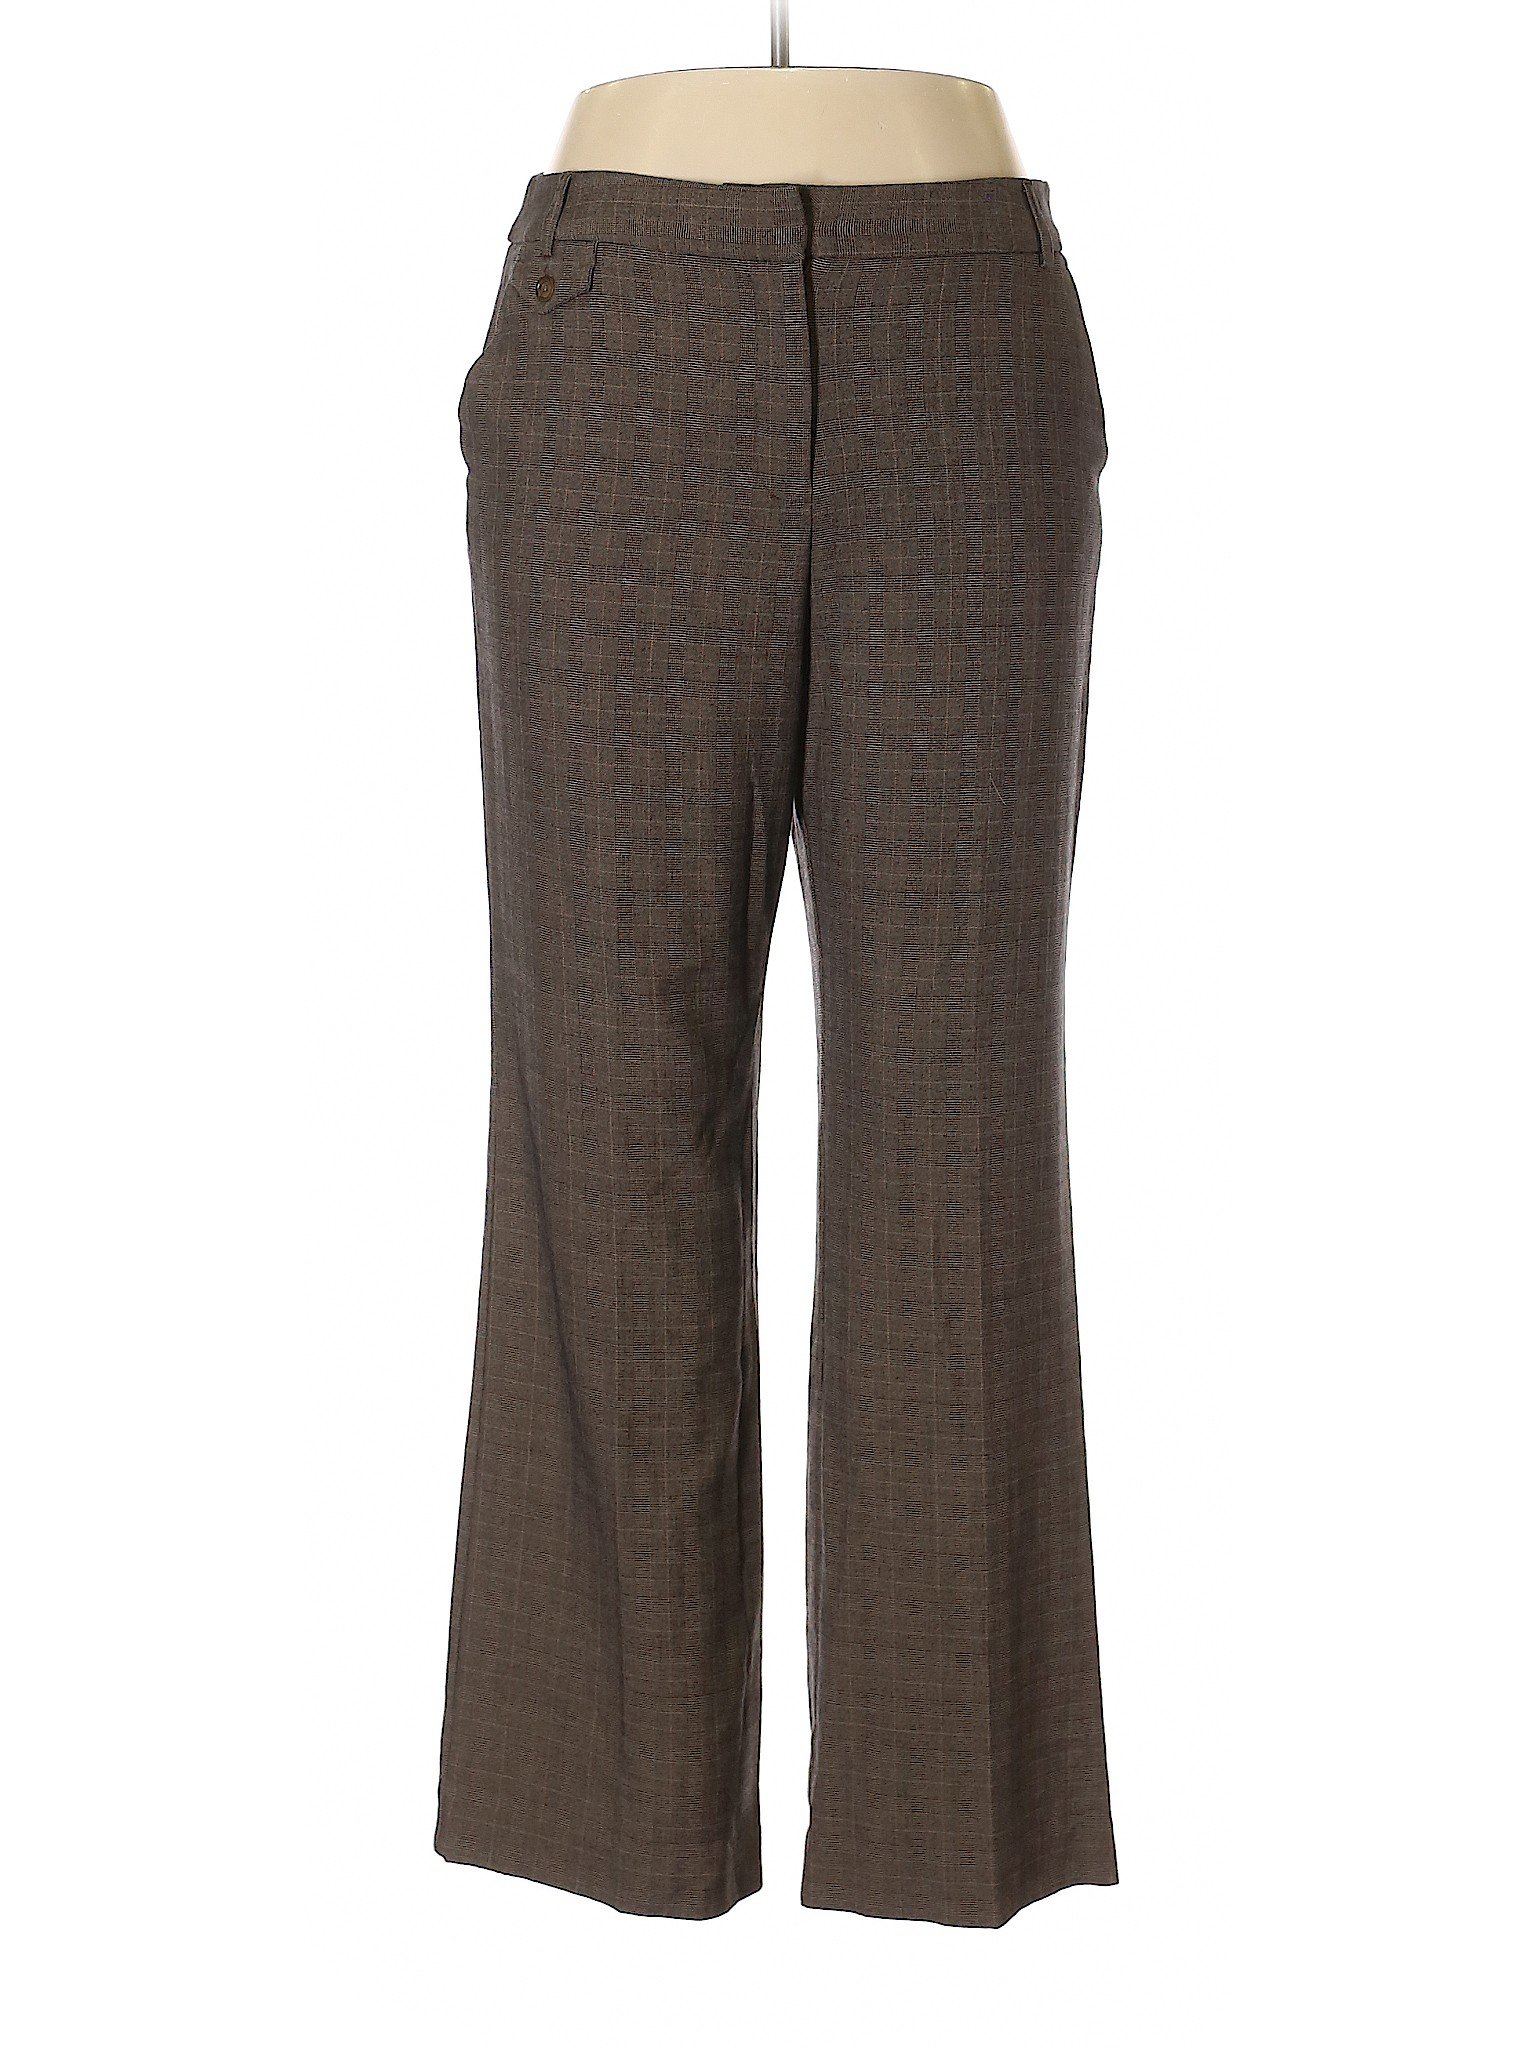 Counterparts Women Brown Dress Pants 14 | eBay